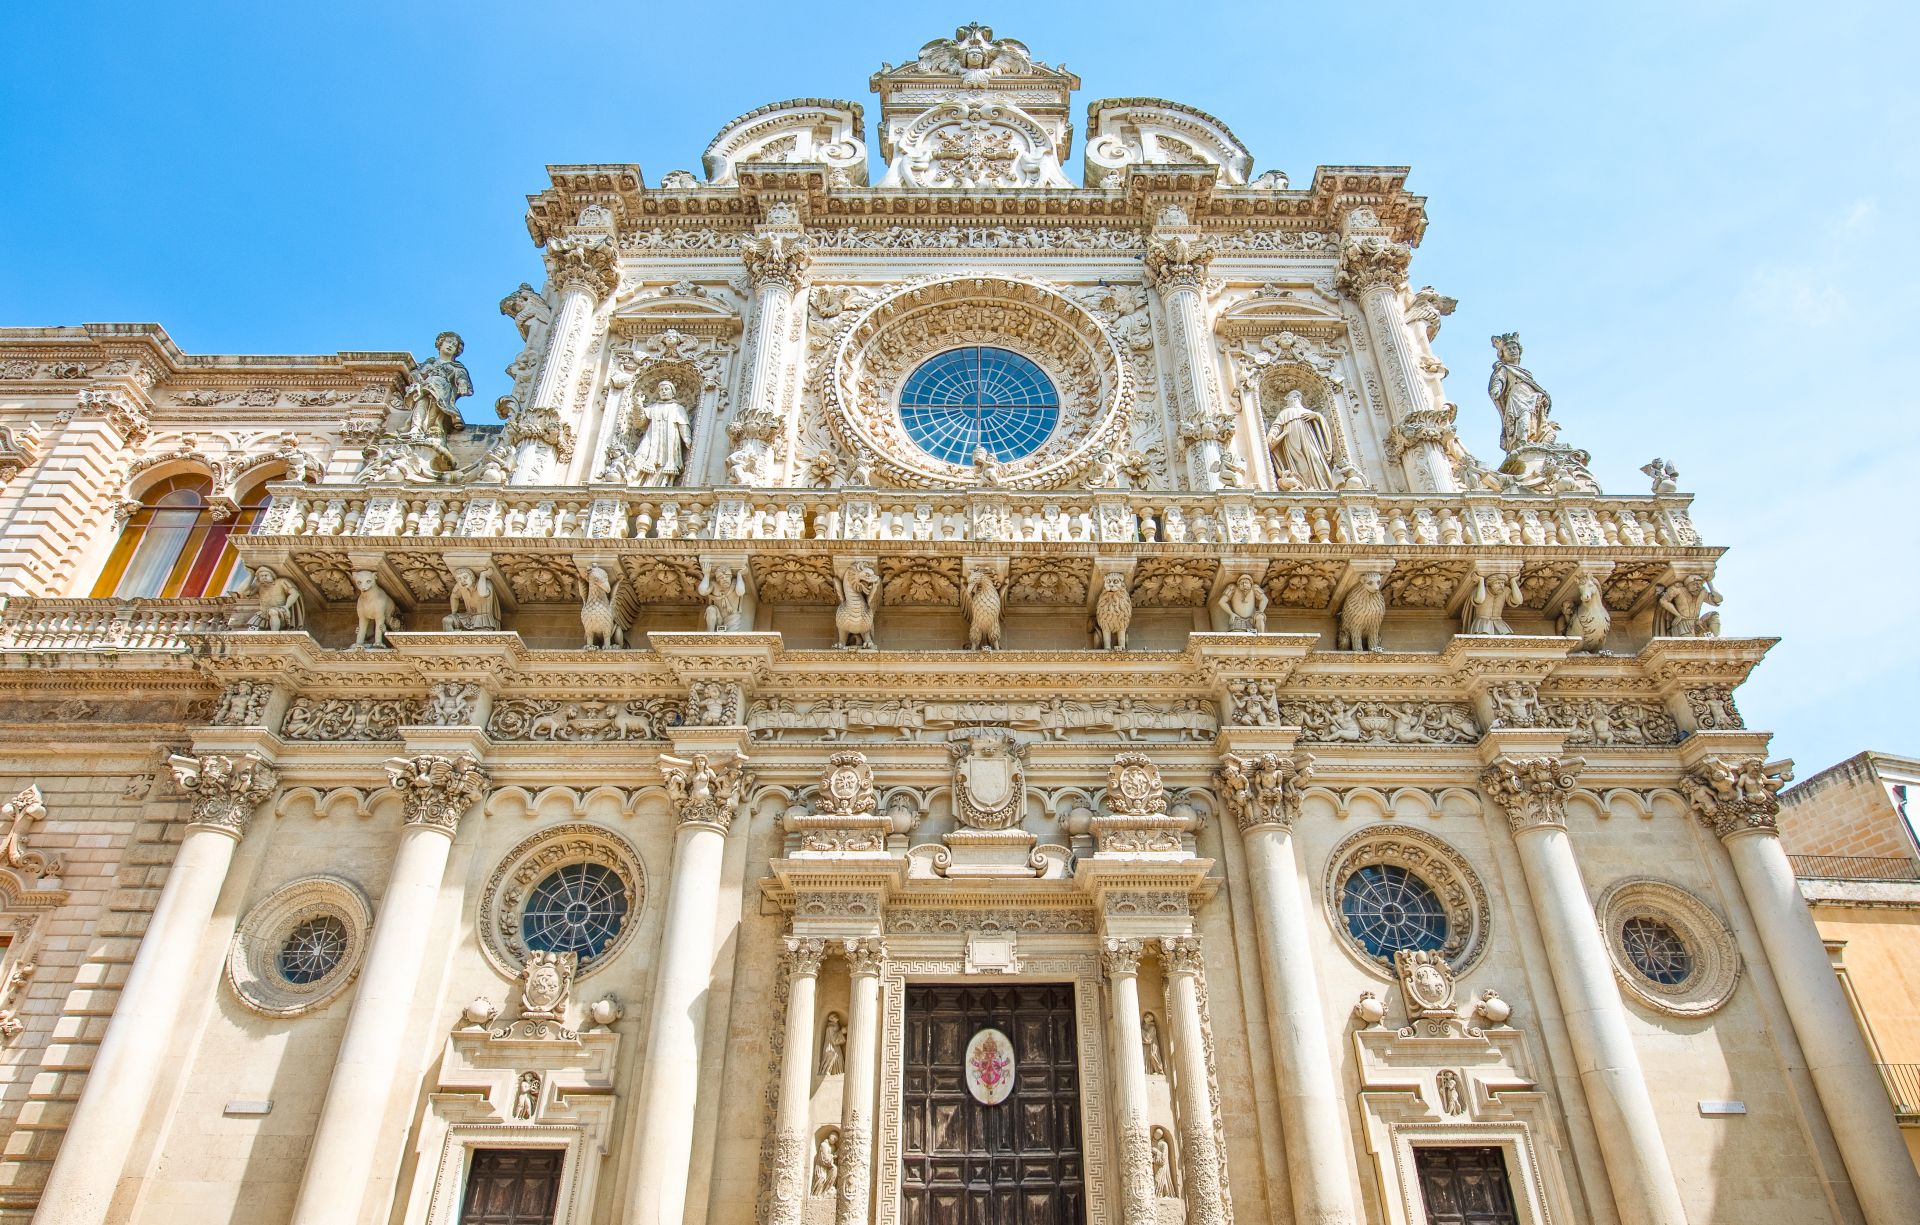 The-full-of-sculpture-facade-of-the-Santa-Croce-Basilica-Lecce-Italy